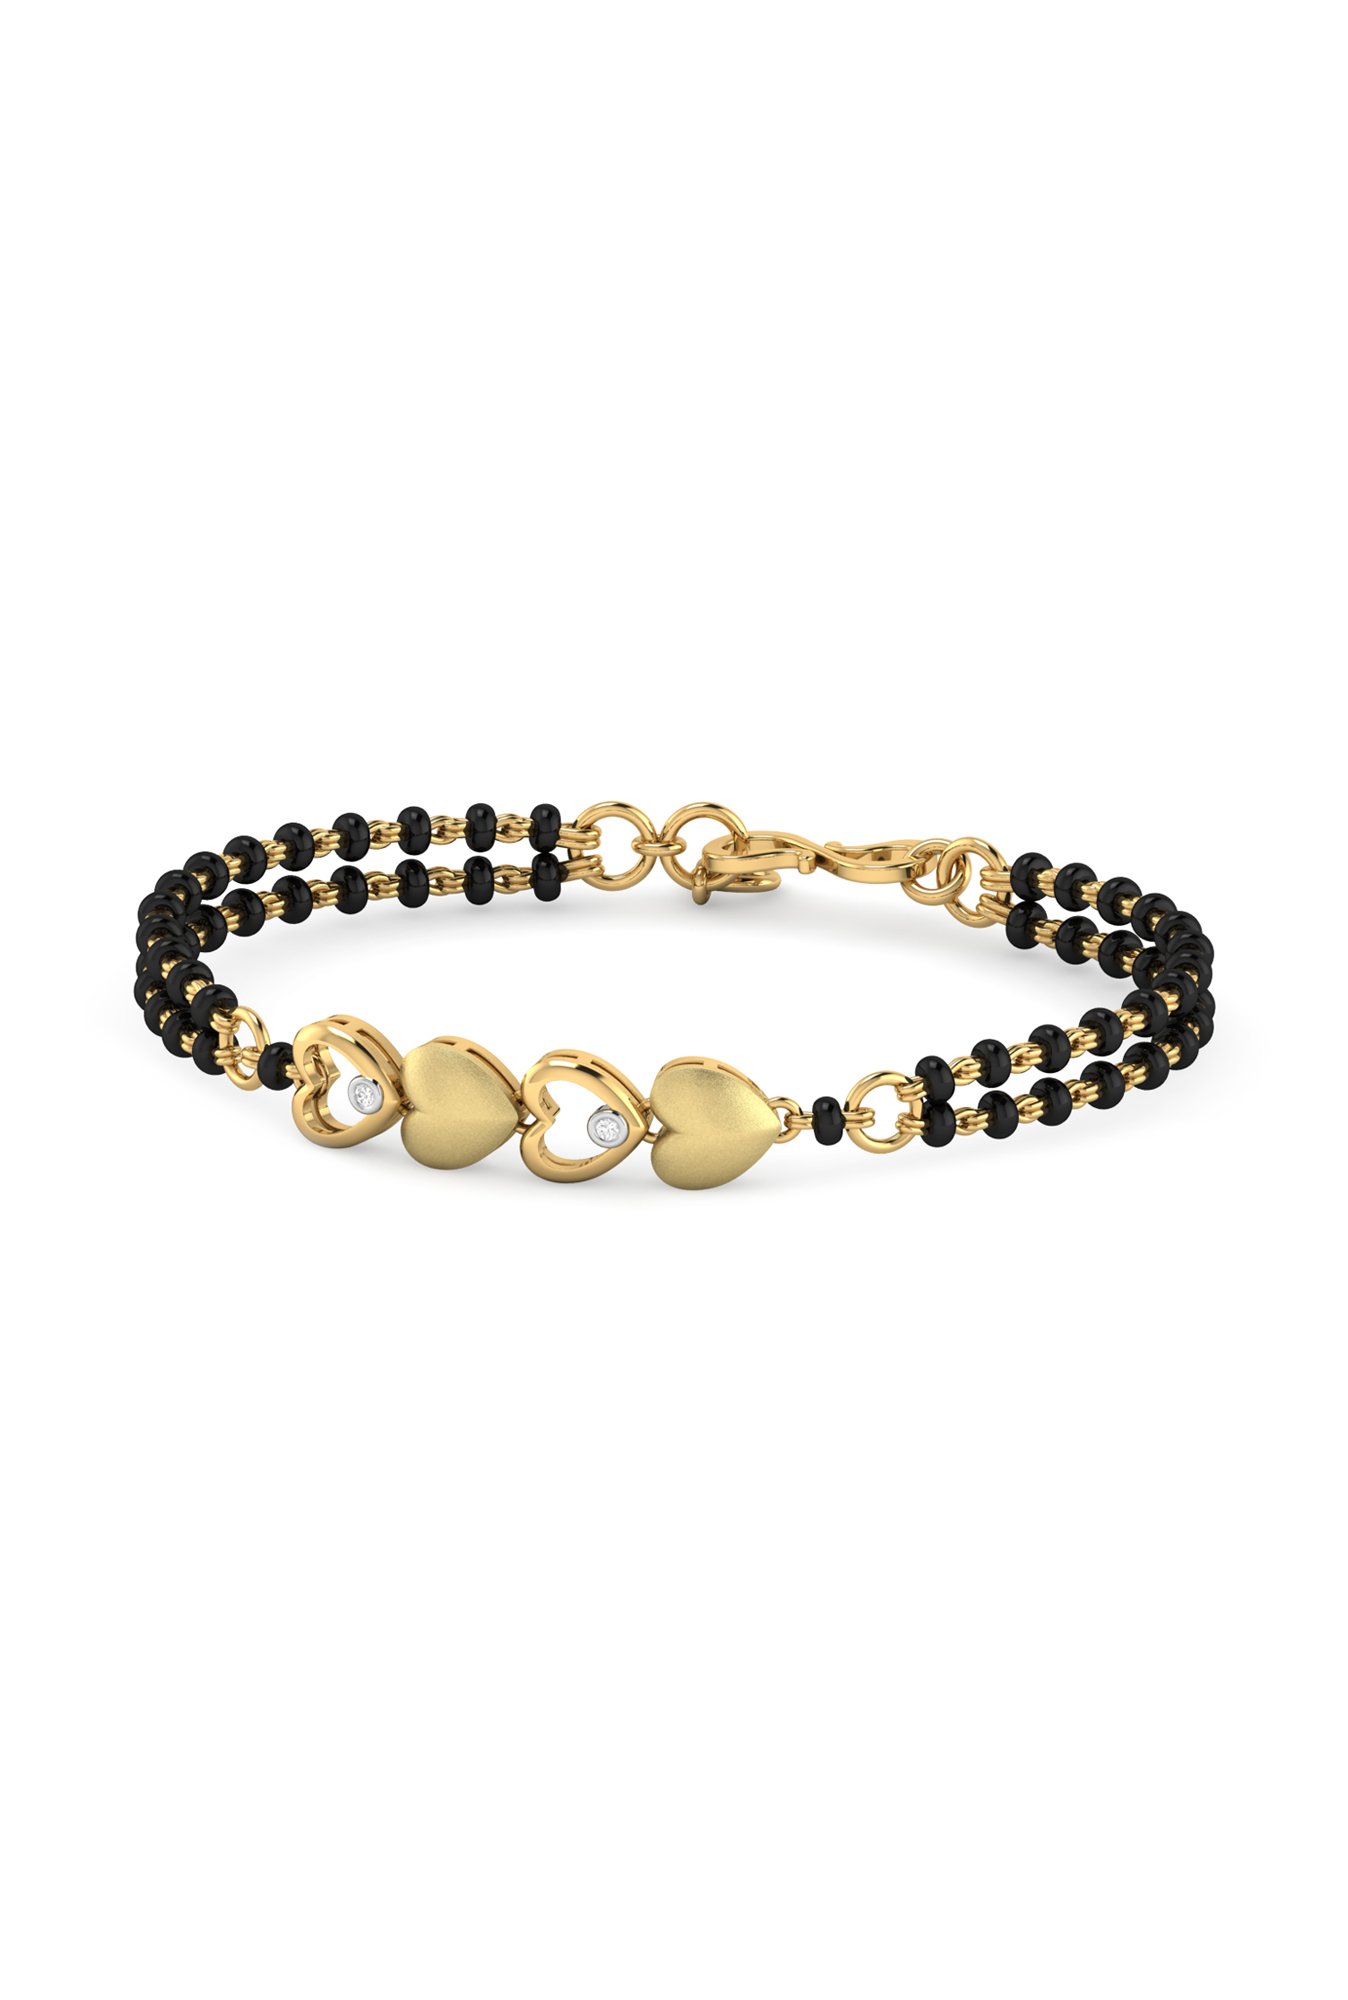 Bracelets for women - 22K Gold Indian Jewelry in USA